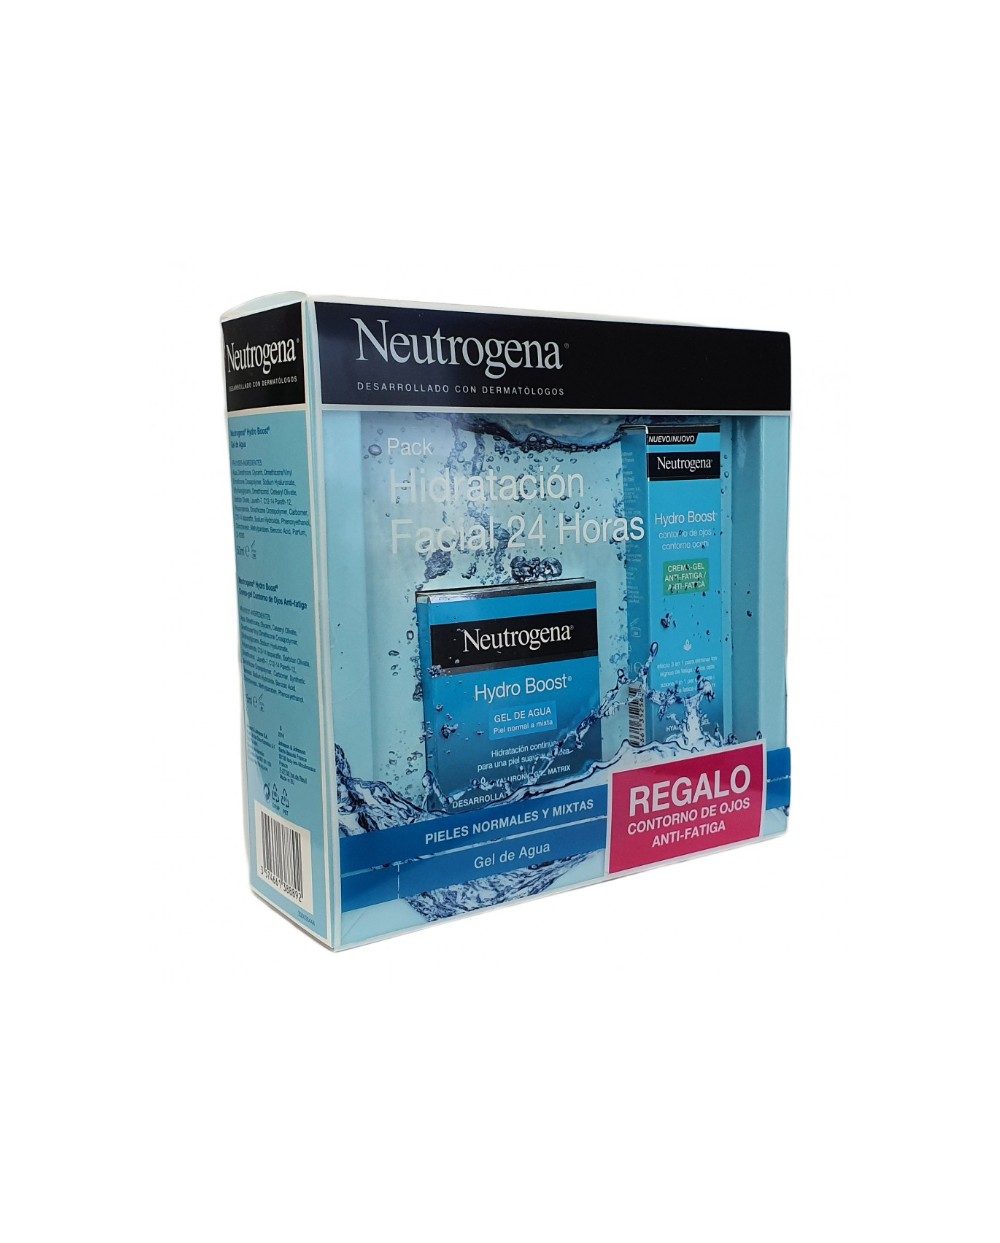 Pack Neutrogena Hydro Boost Gel de Agua 50 ml + Regalo Contorno de Ojos